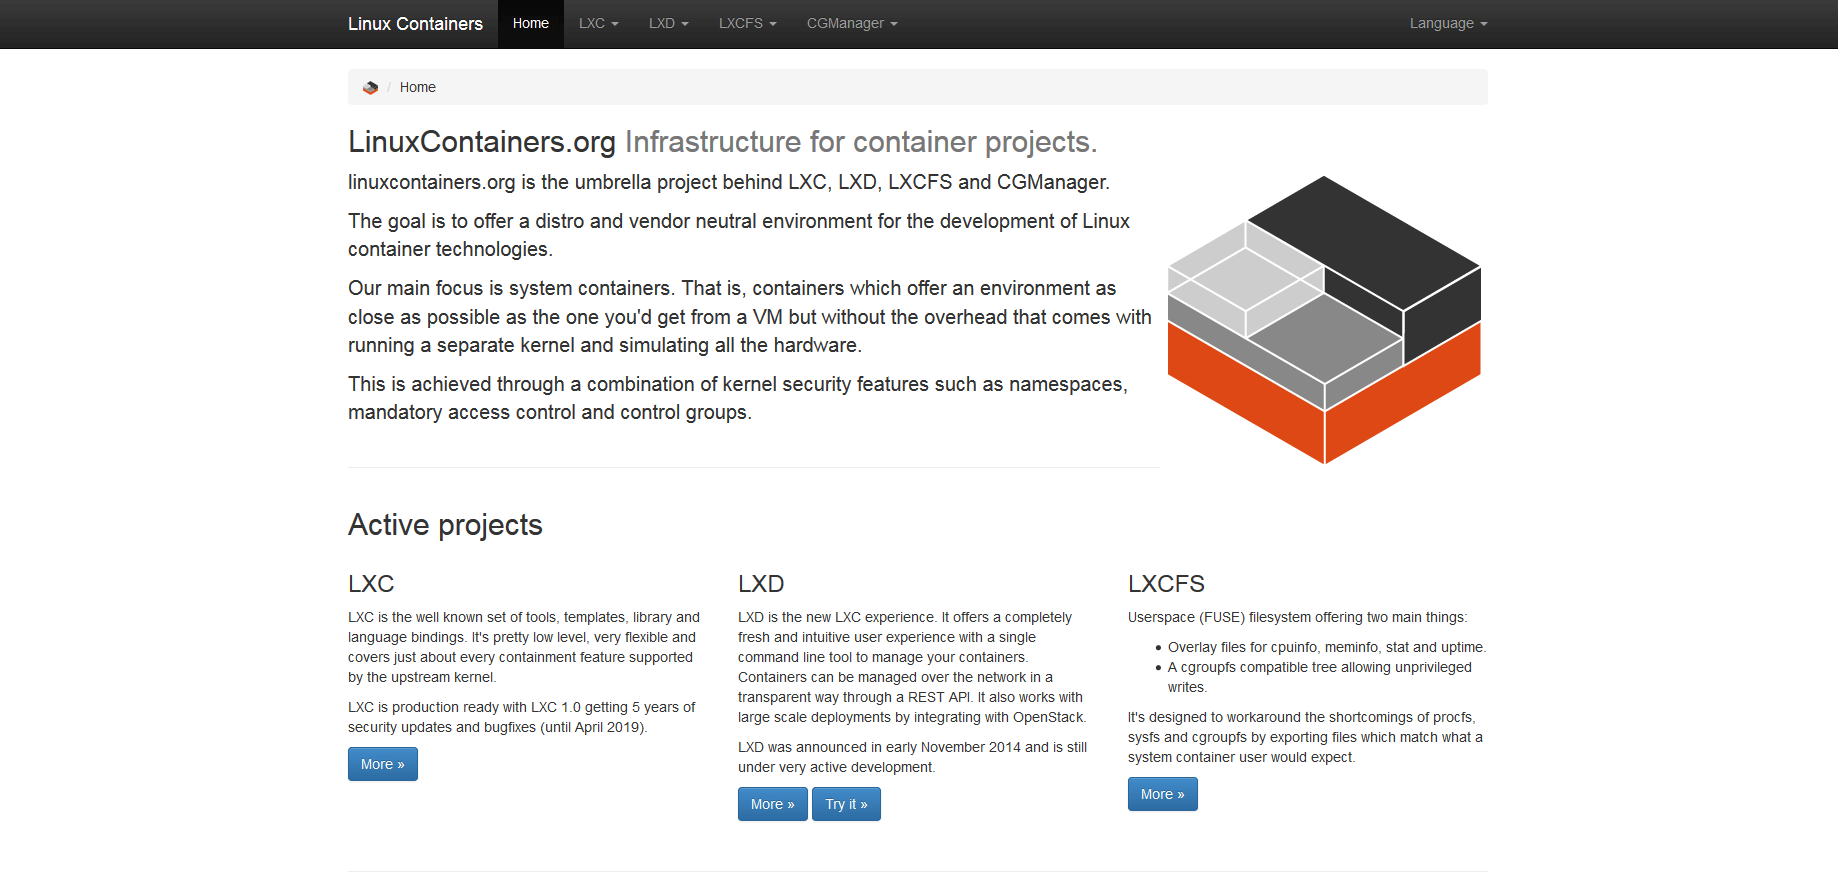 Startseite des Dachprojekts LinuxContainers.org